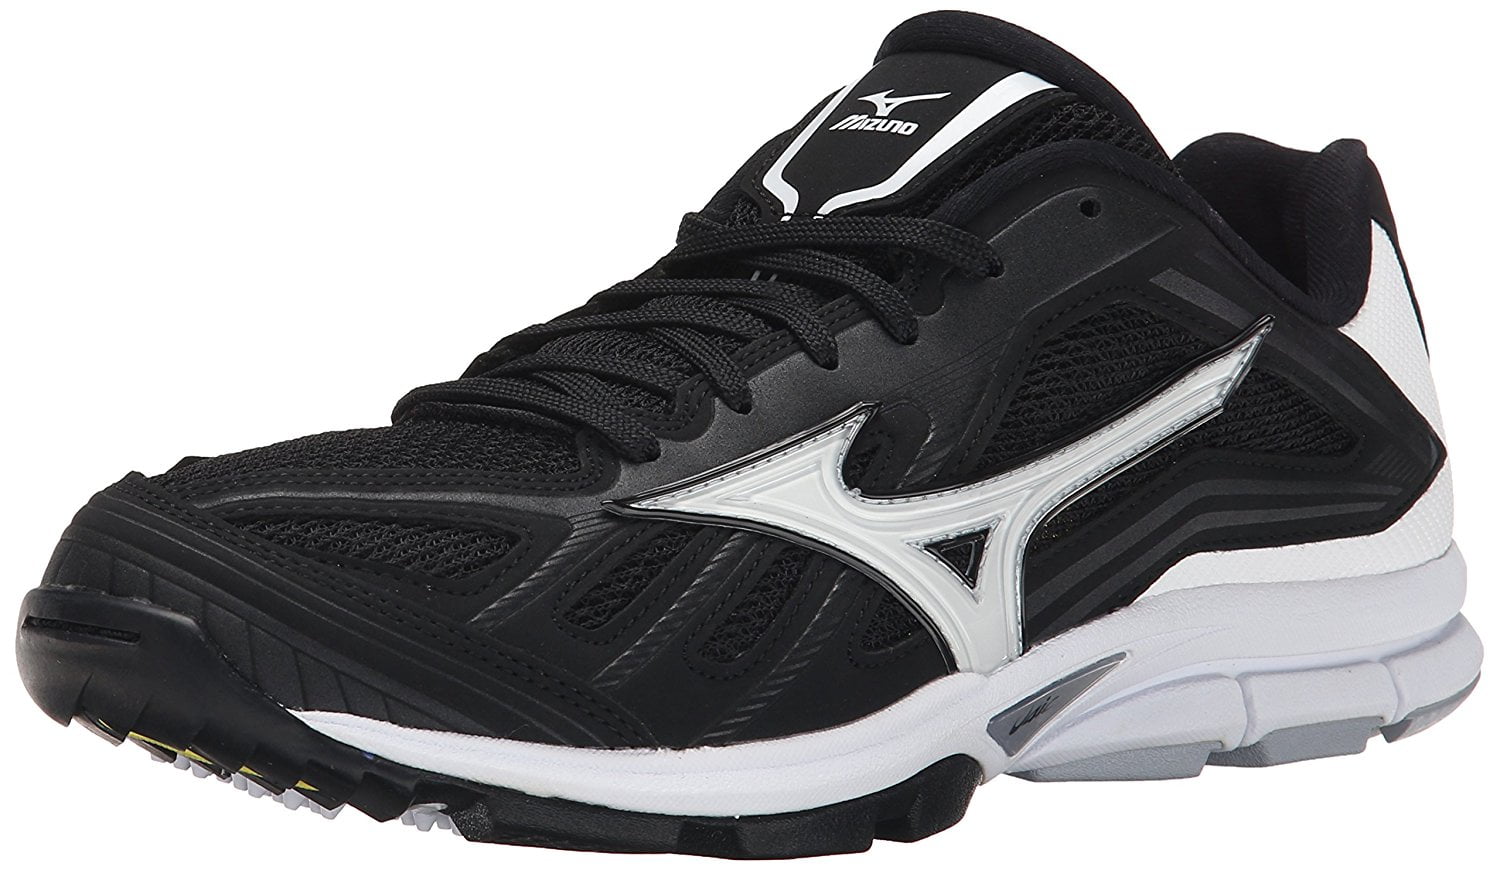 Mizuno Men's Players Trainer Baseball Turf Shoe, Black/White, 12 M US ...